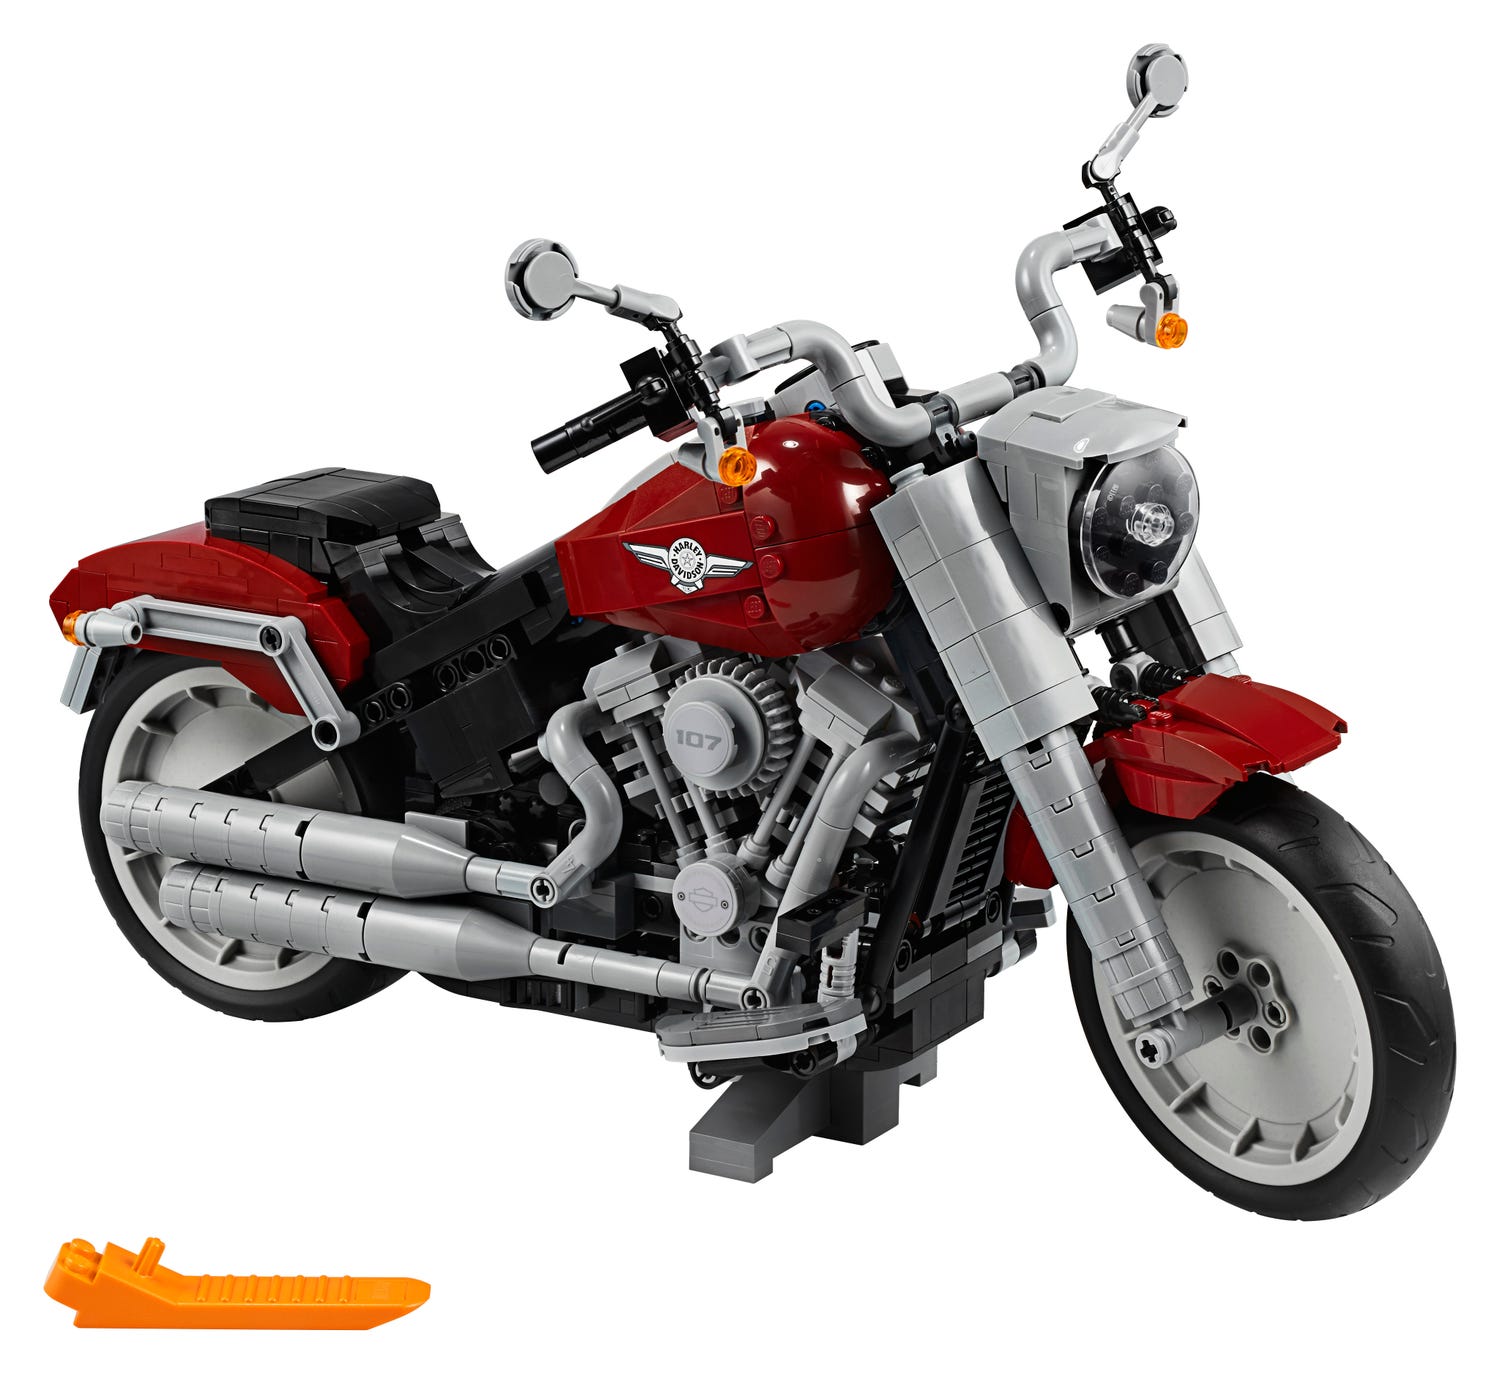 Harley Davidson Fat Boy 10269 Creator Expert Buy Online At The Official Lego Shop Au